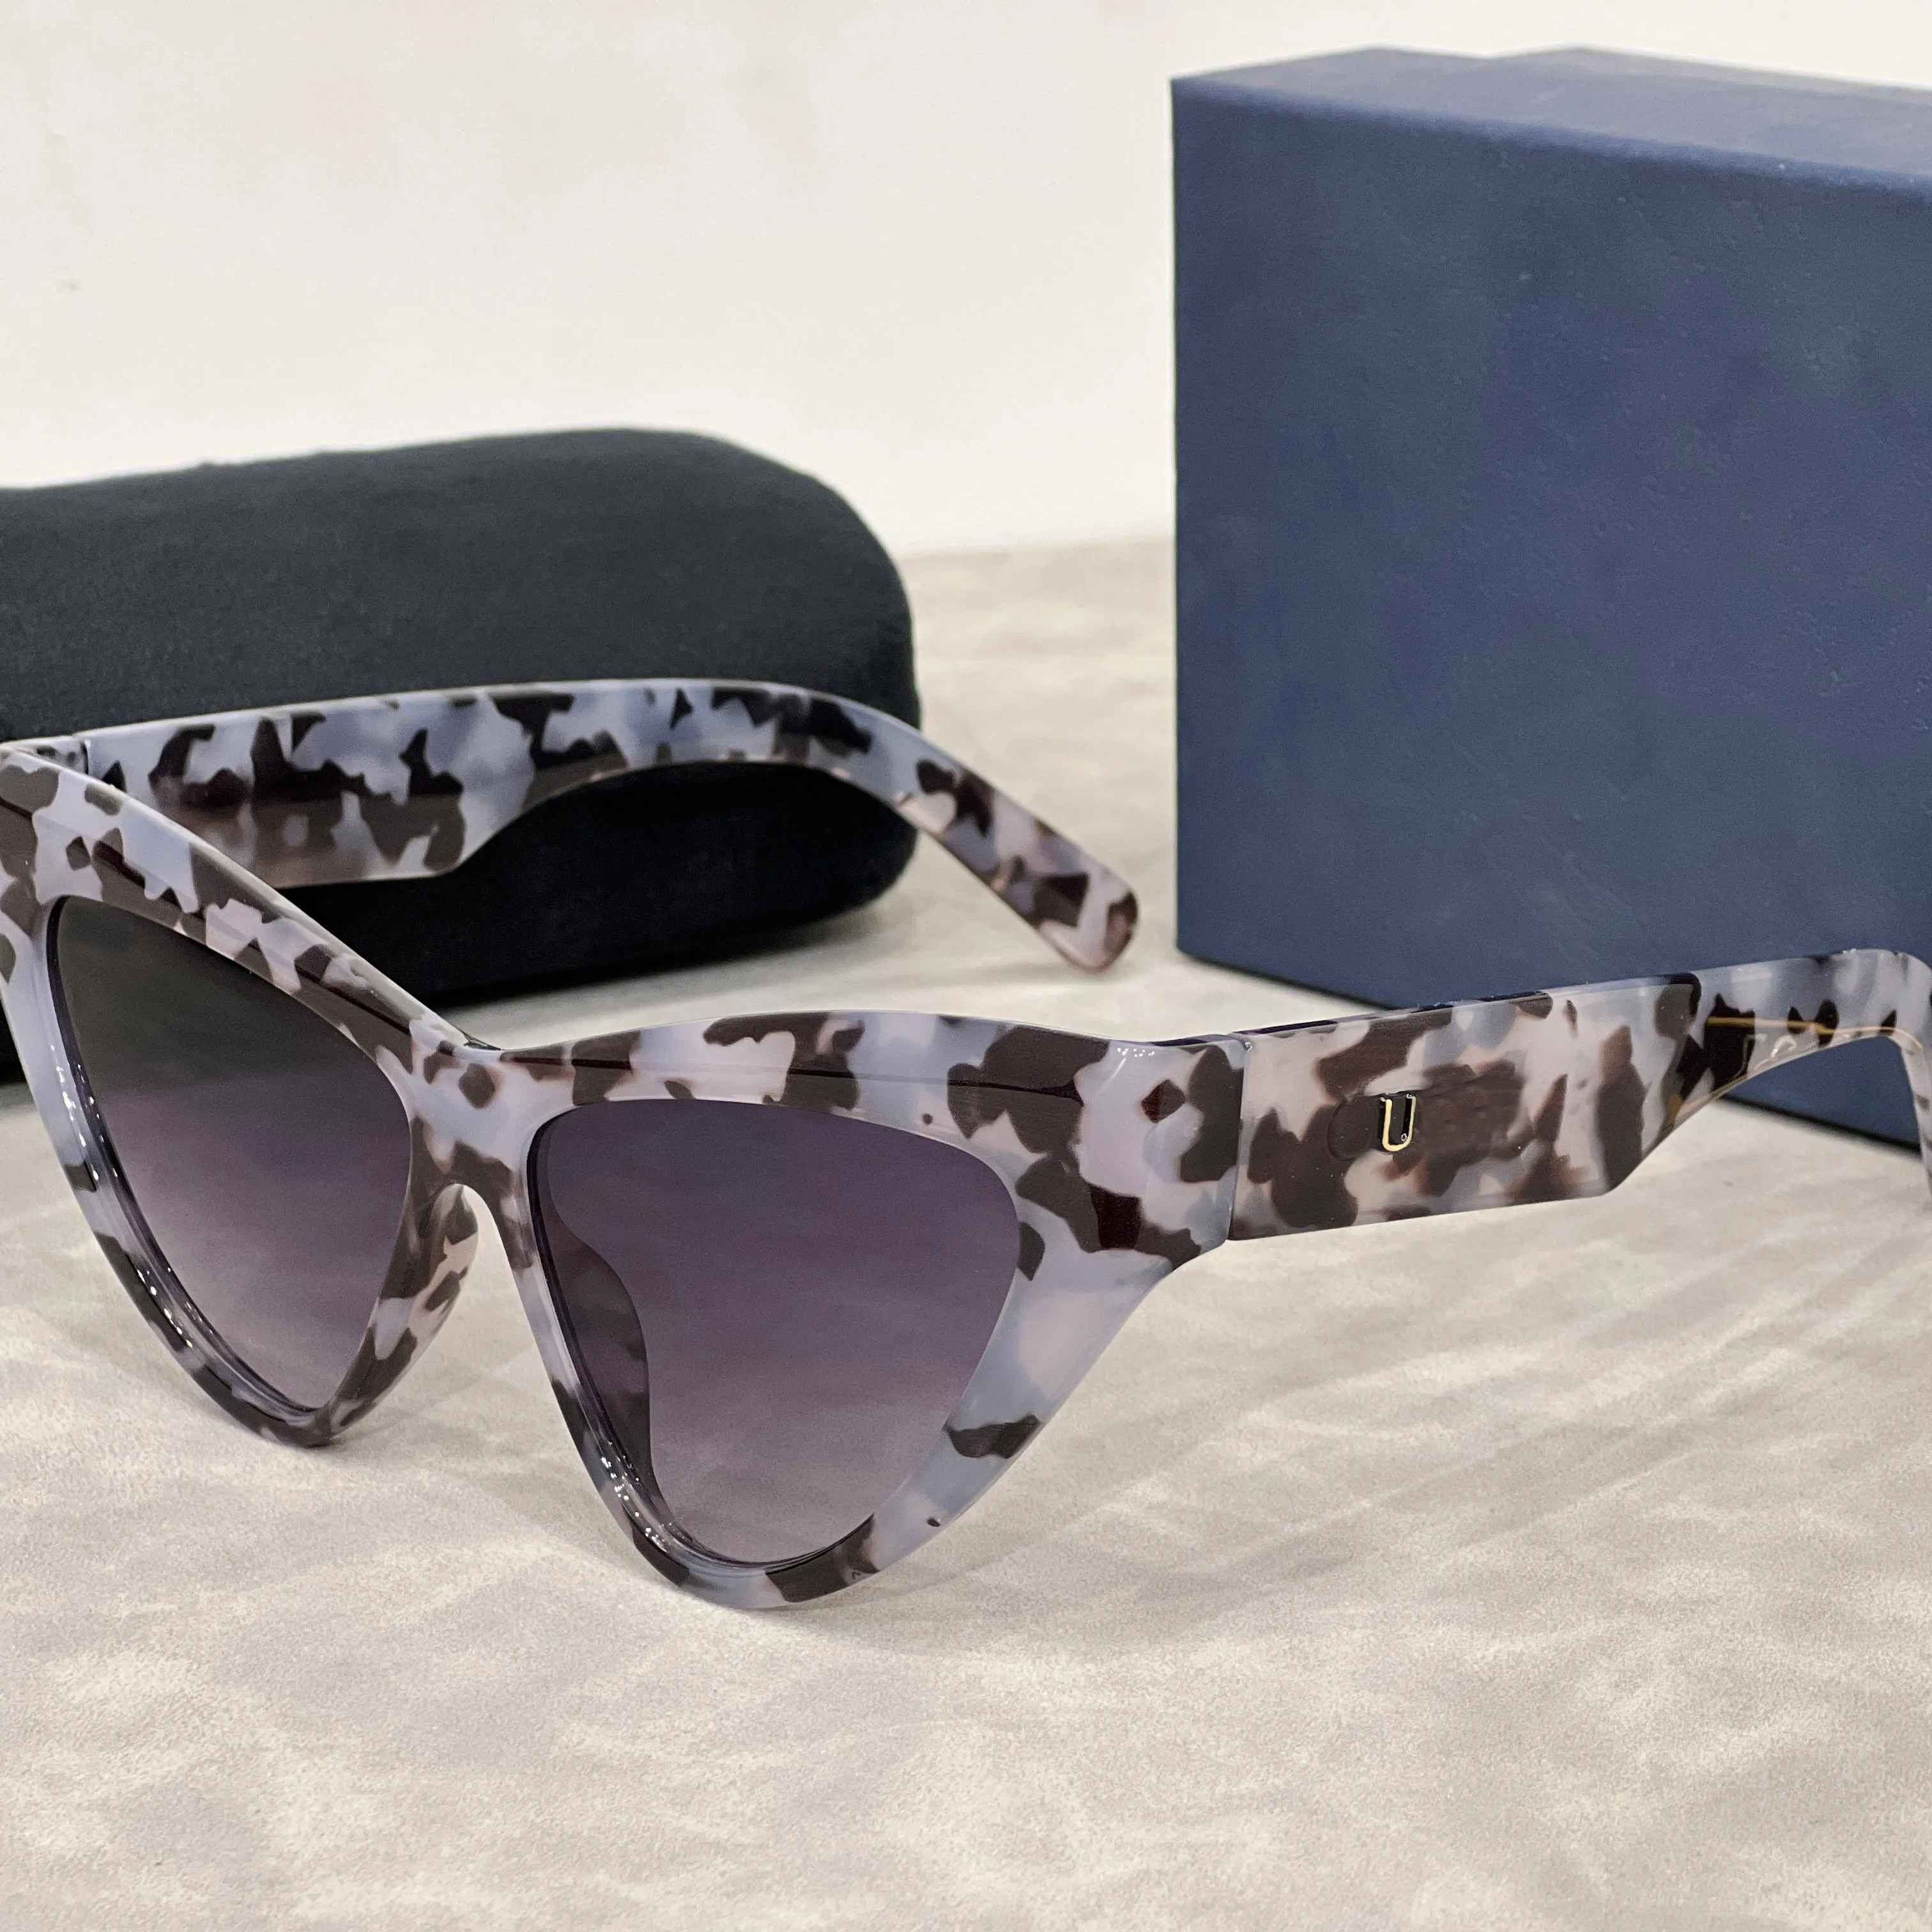 Sunglasses designer sunglasses luxury designer sunglasses beach travel sunglasses with optional gift box Women's eyewear metal design sun shades